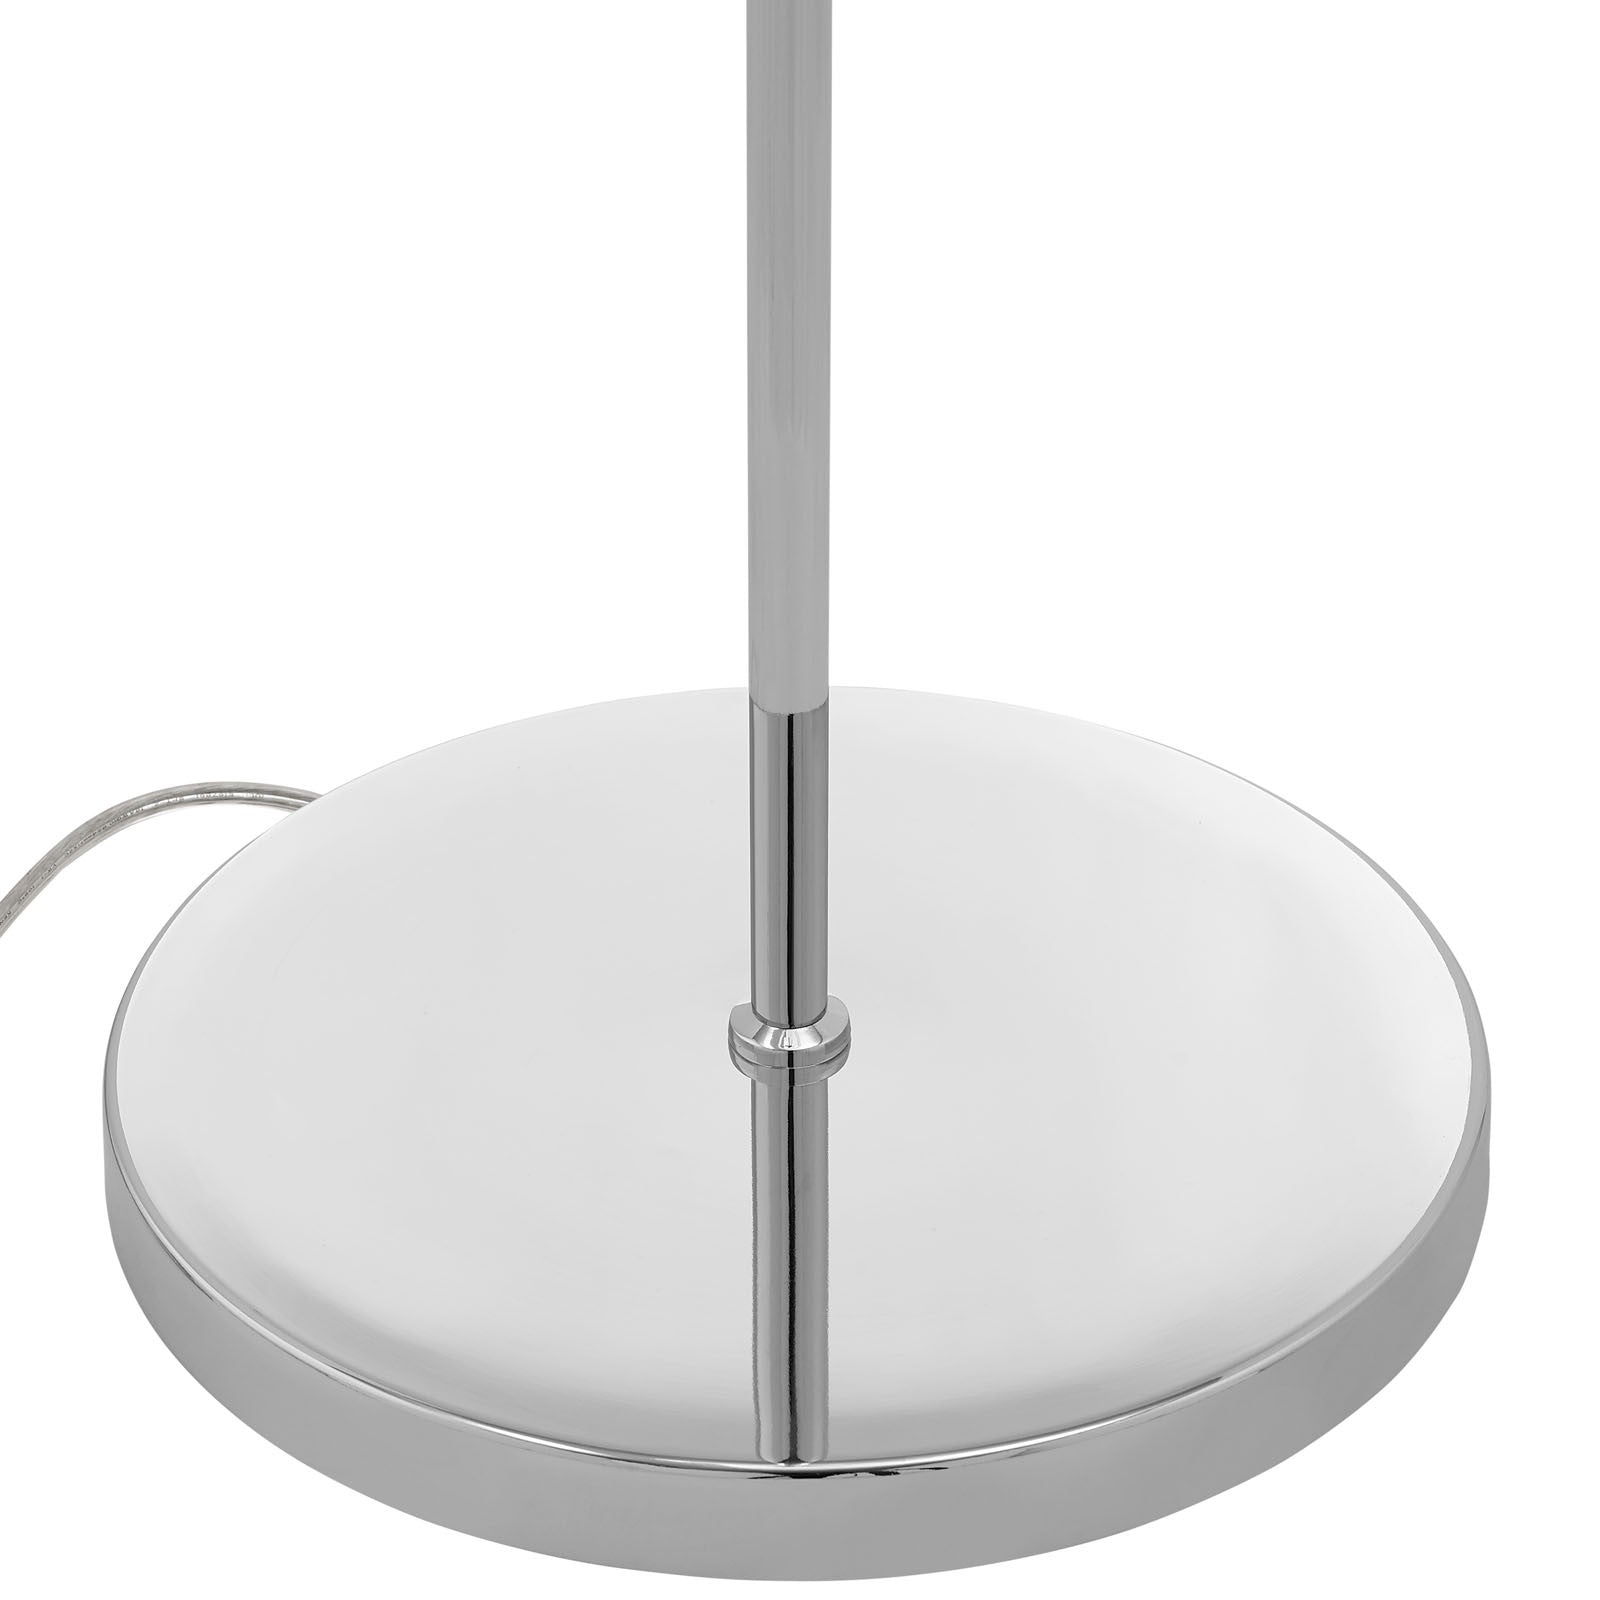 Modway Furniture Arena Floor Lamp EEI-1220-SLV-Minimal & Modern